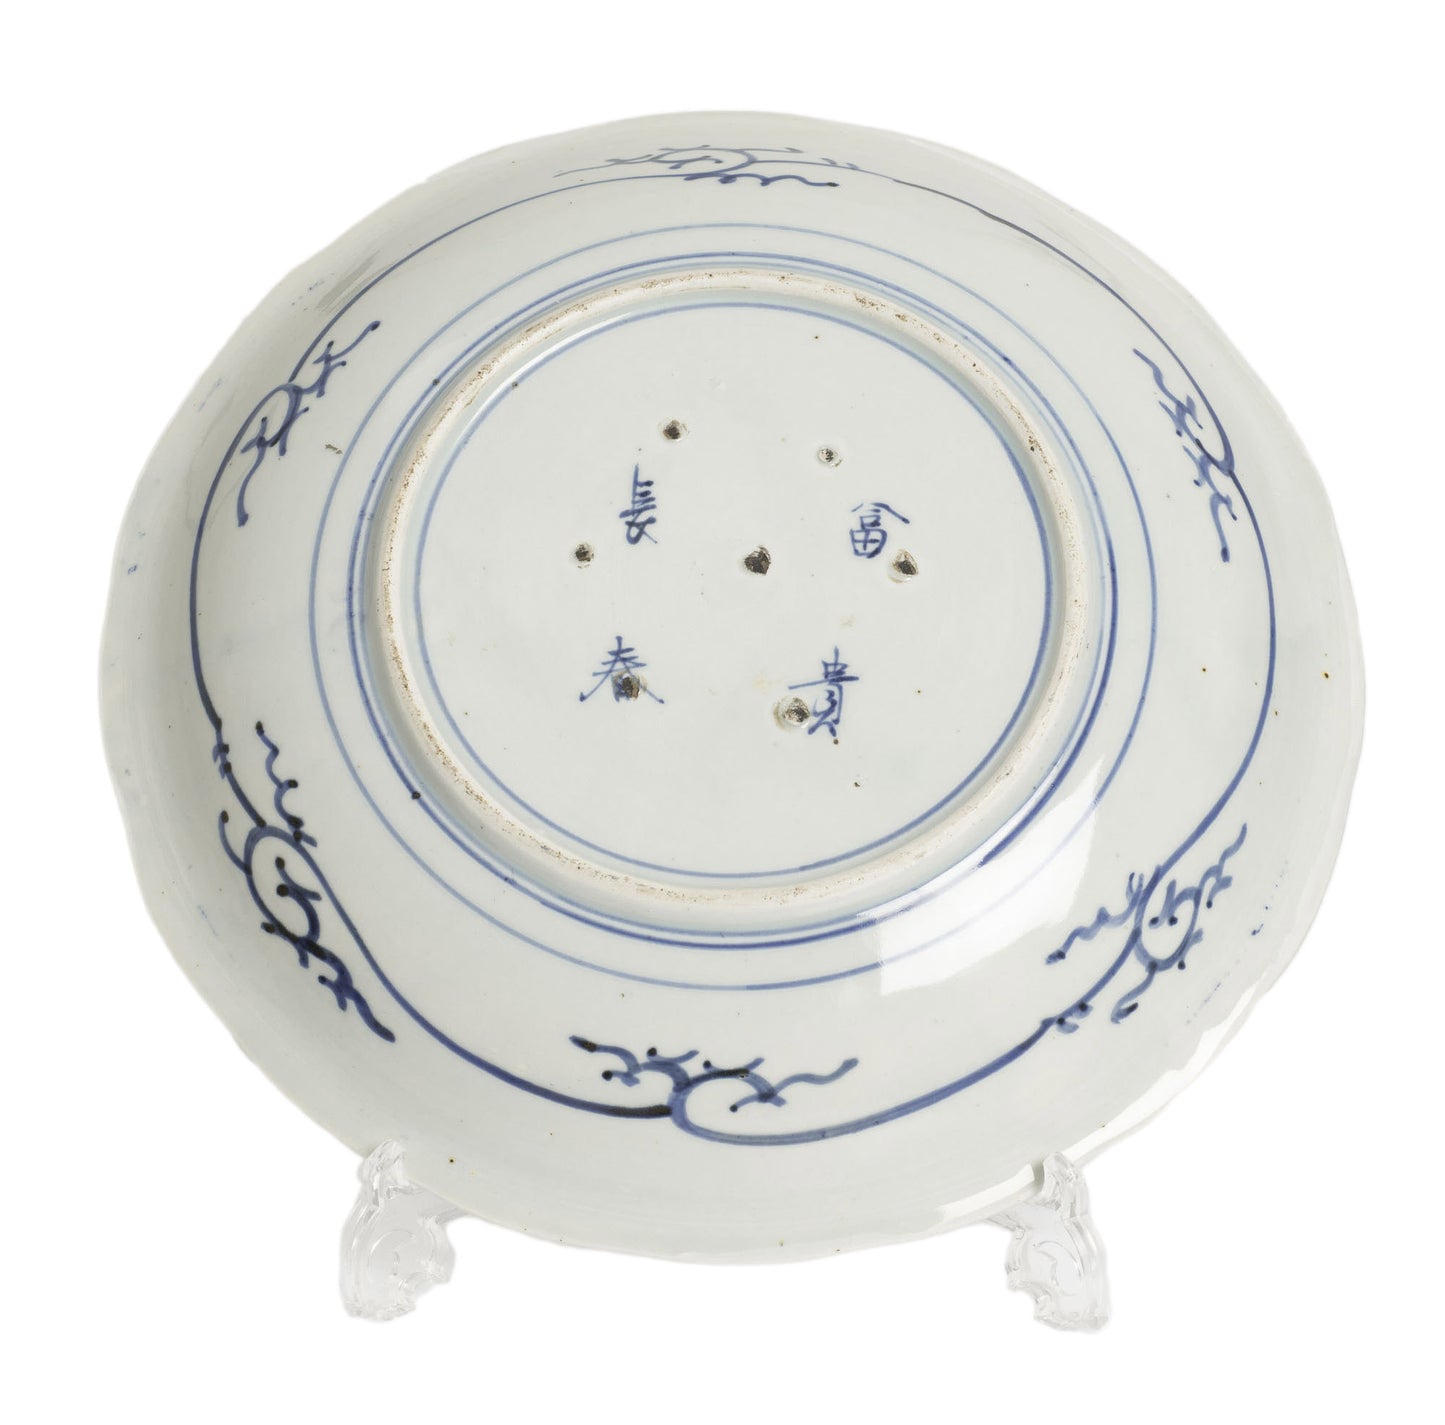 Antique Edo Japanese Arita Porcelain Hand Painted Blue & White Dish with Ducks 富貴長春 (2959)